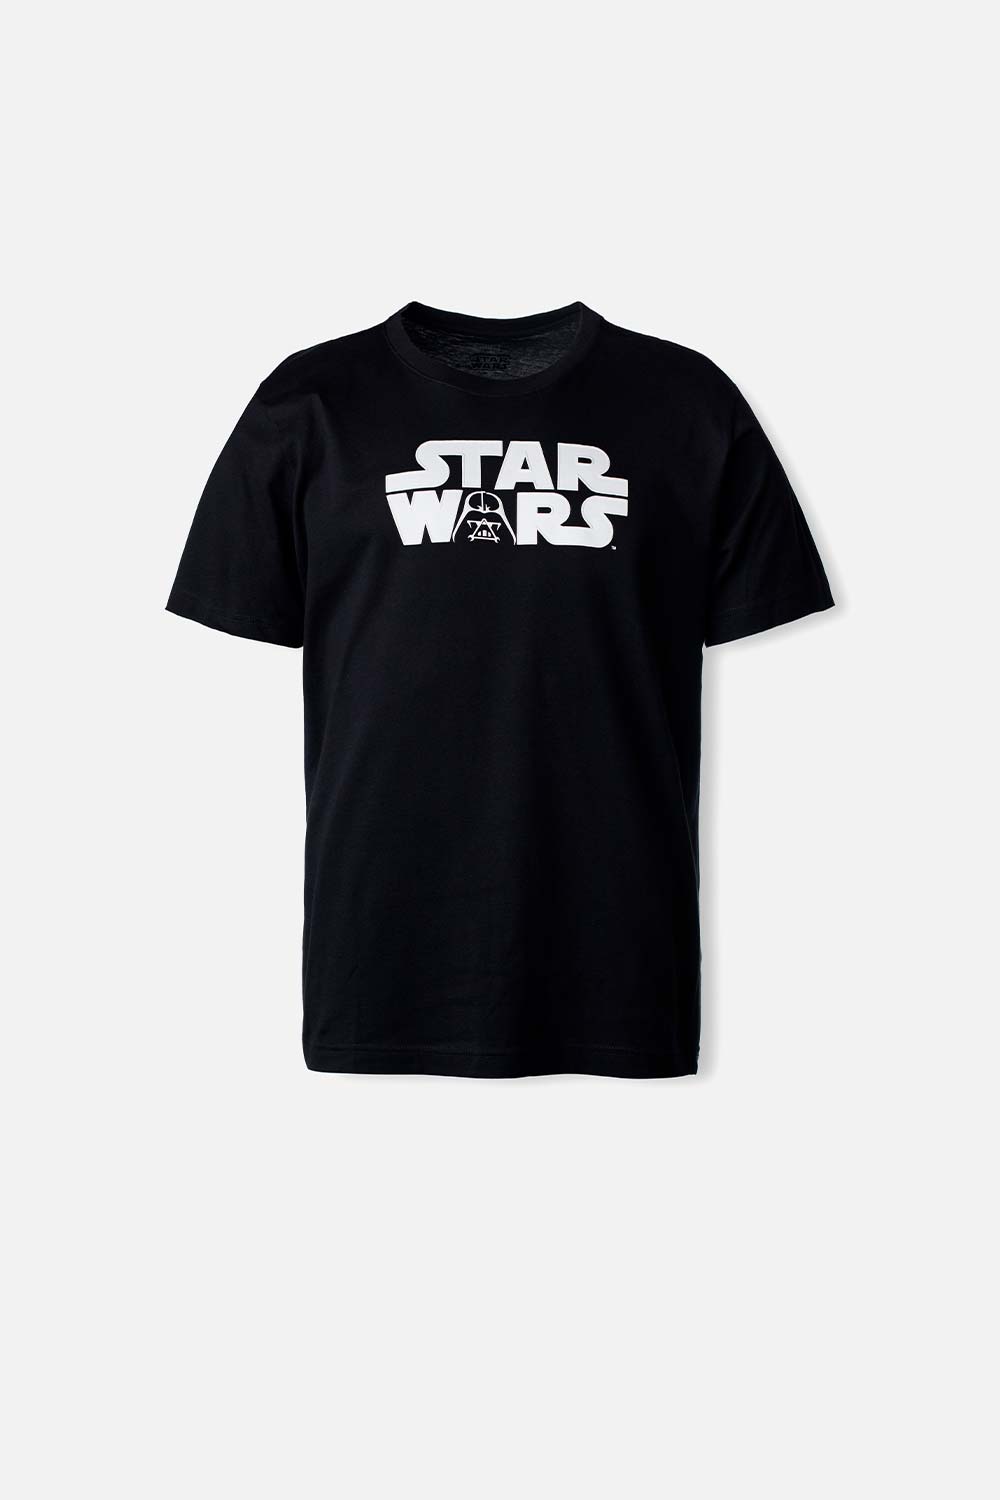 Camiseta de Star Wars manga corta negra para hombre S-0